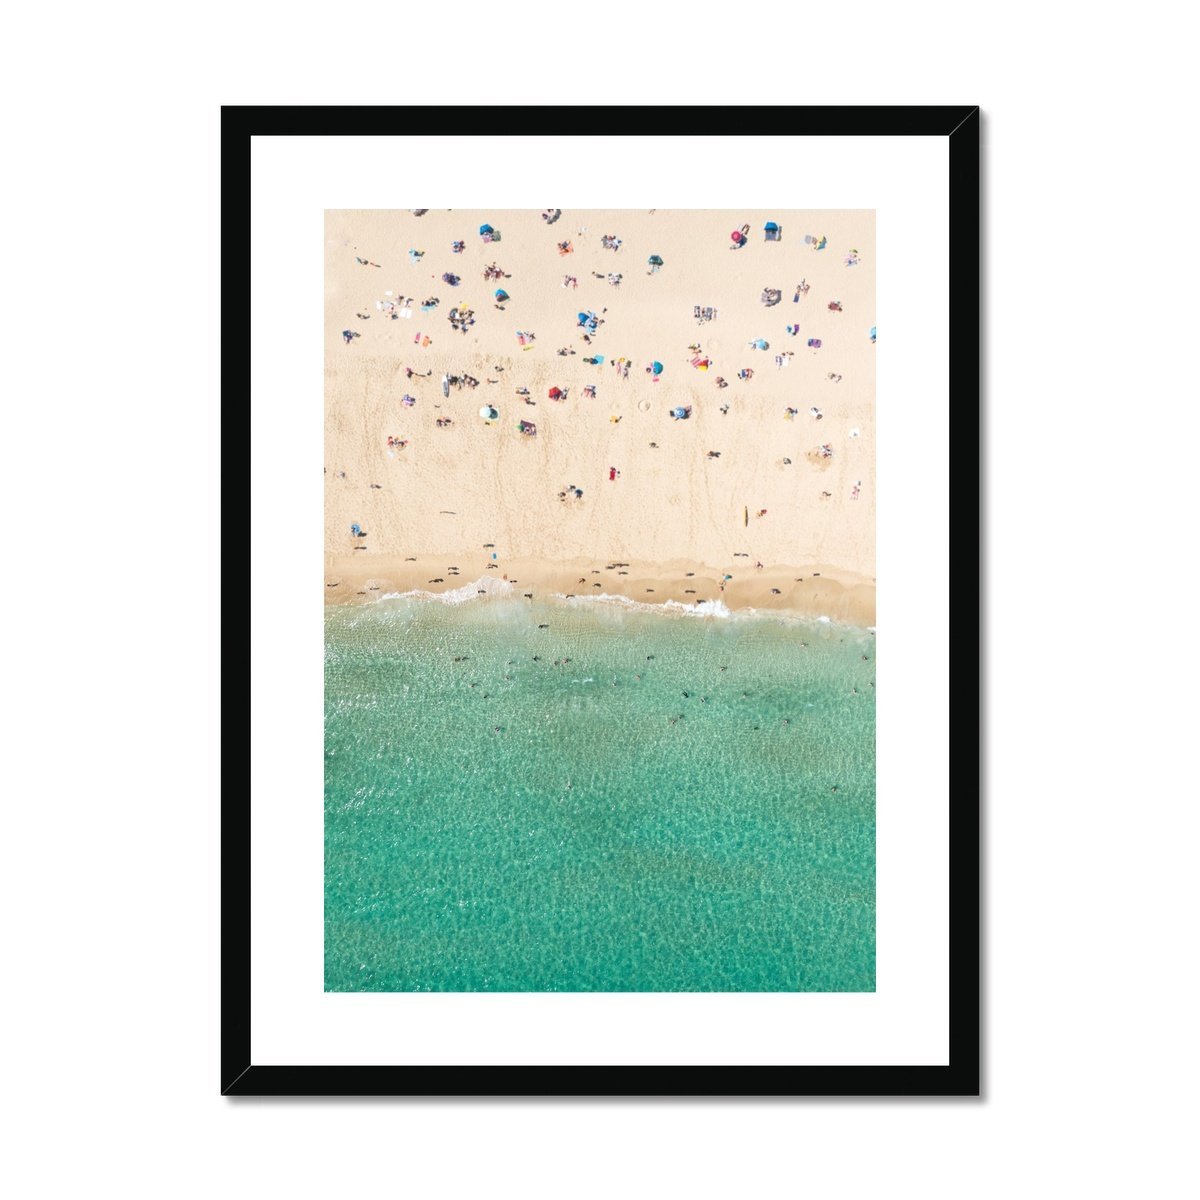 beachgoers at porthcurno framed print